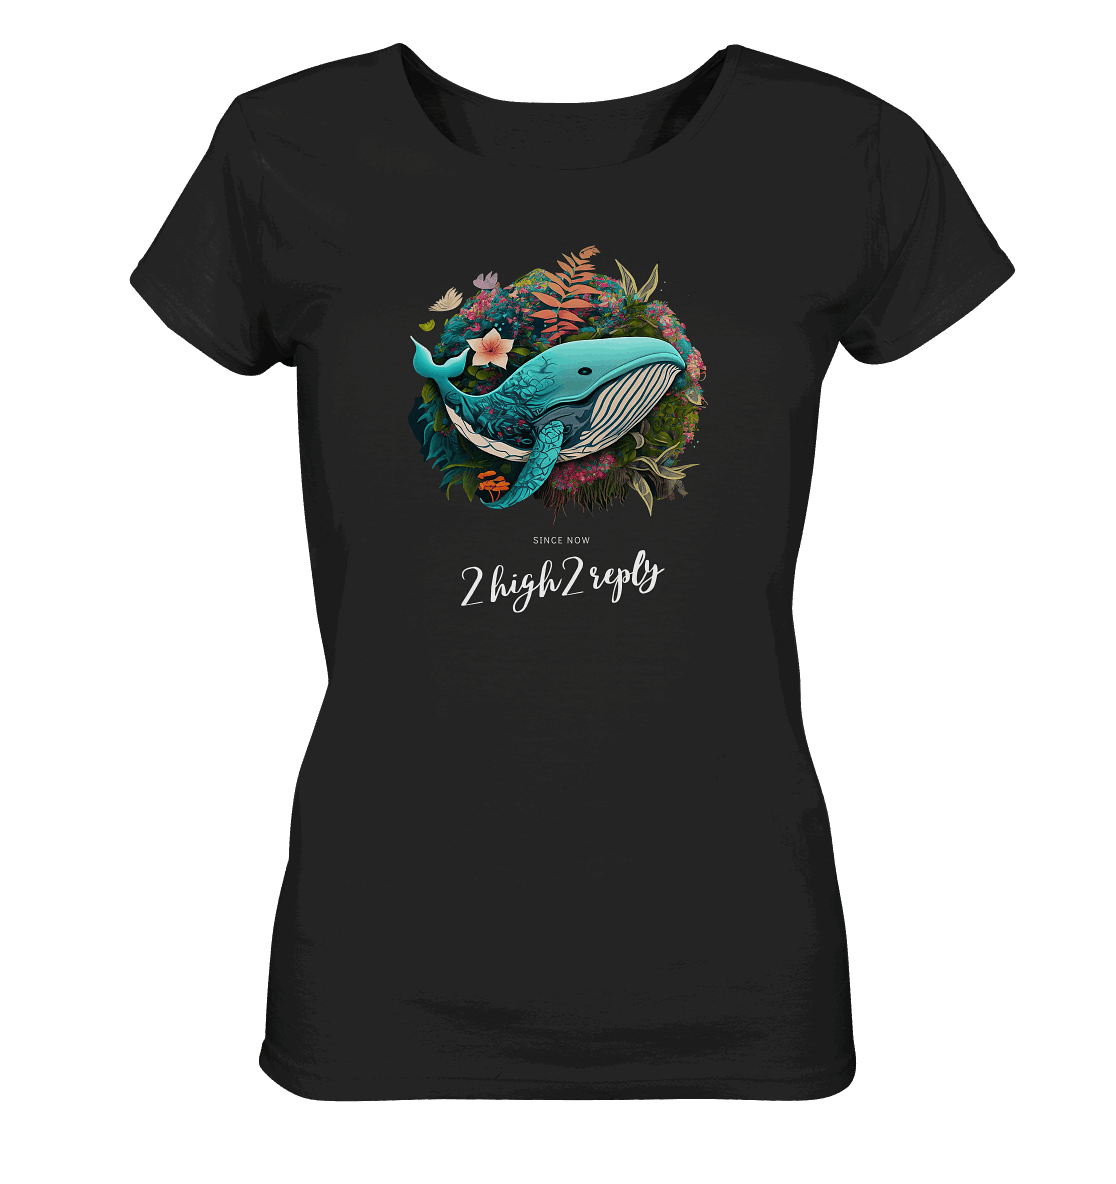 2high2reply / whale of wonder - Ladies Organic Shirt